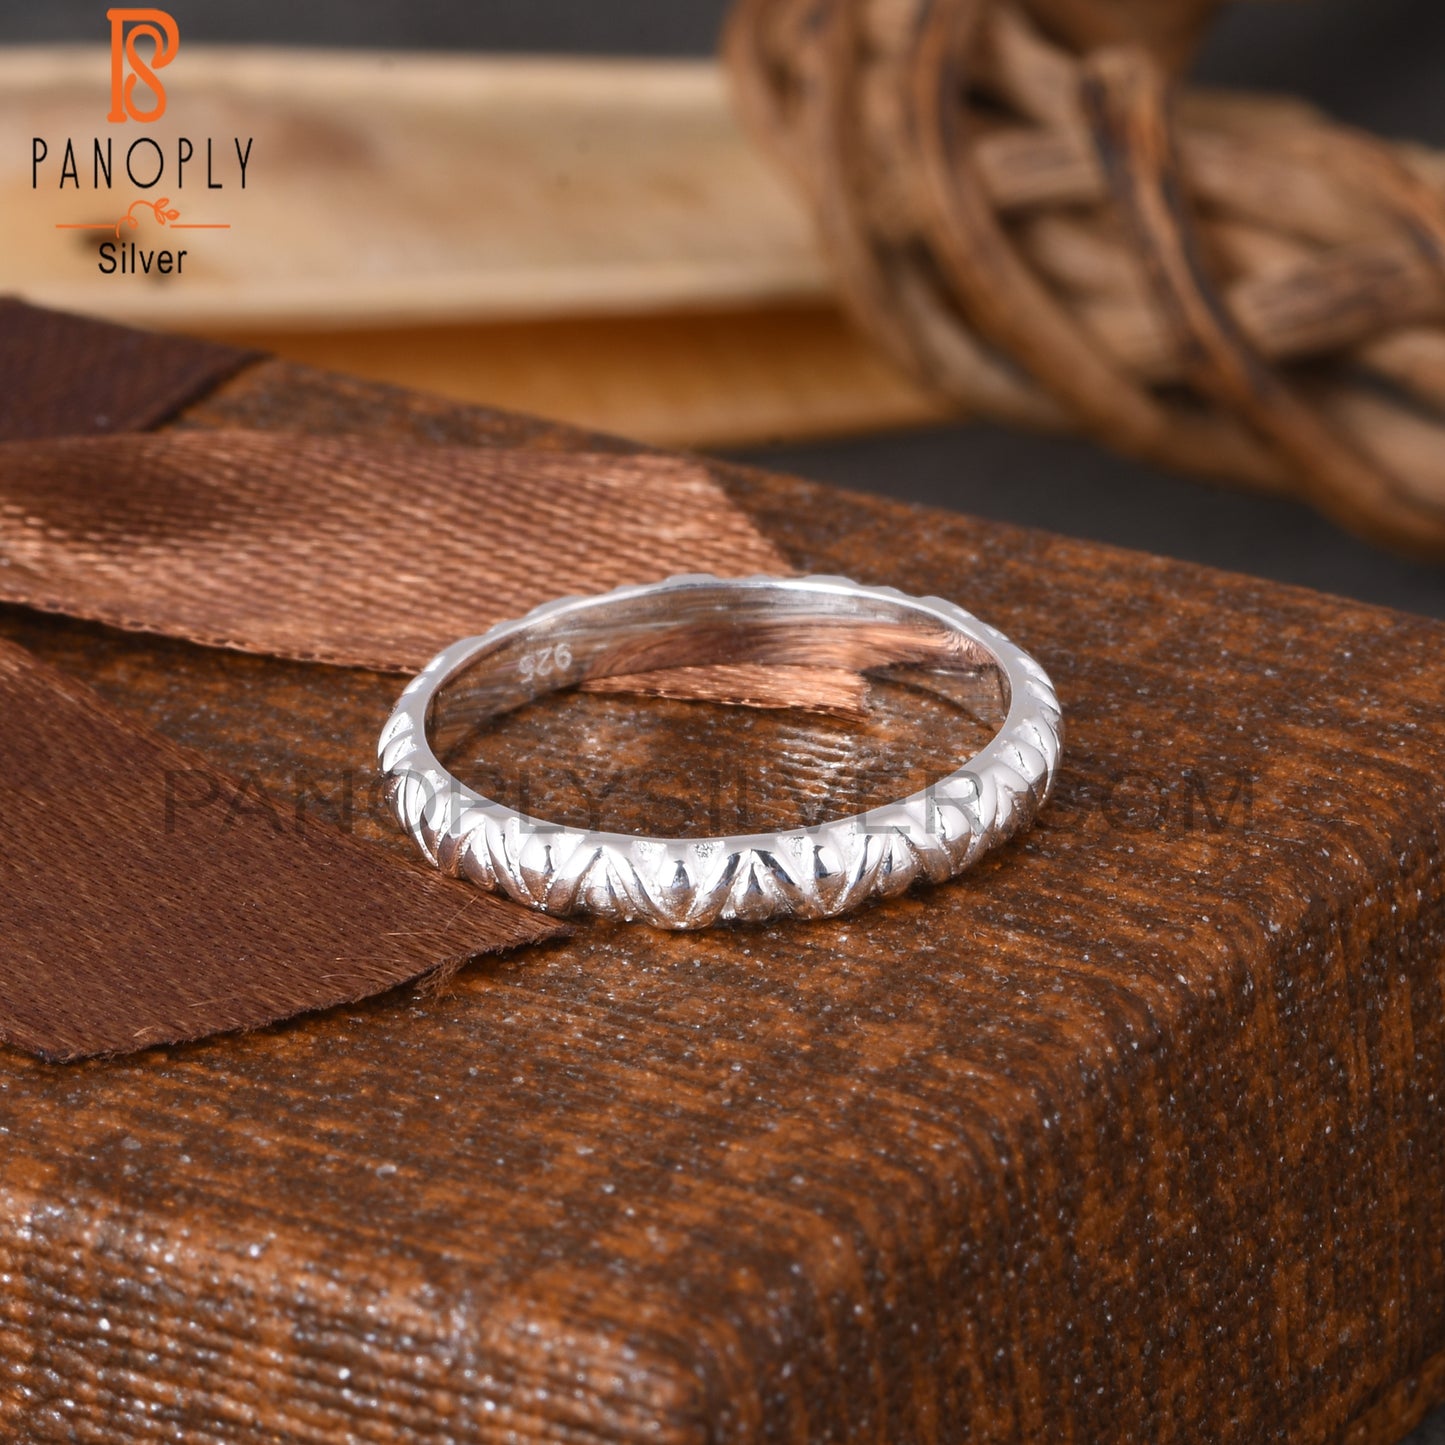 Handmade 925 Sterling Silver Ring